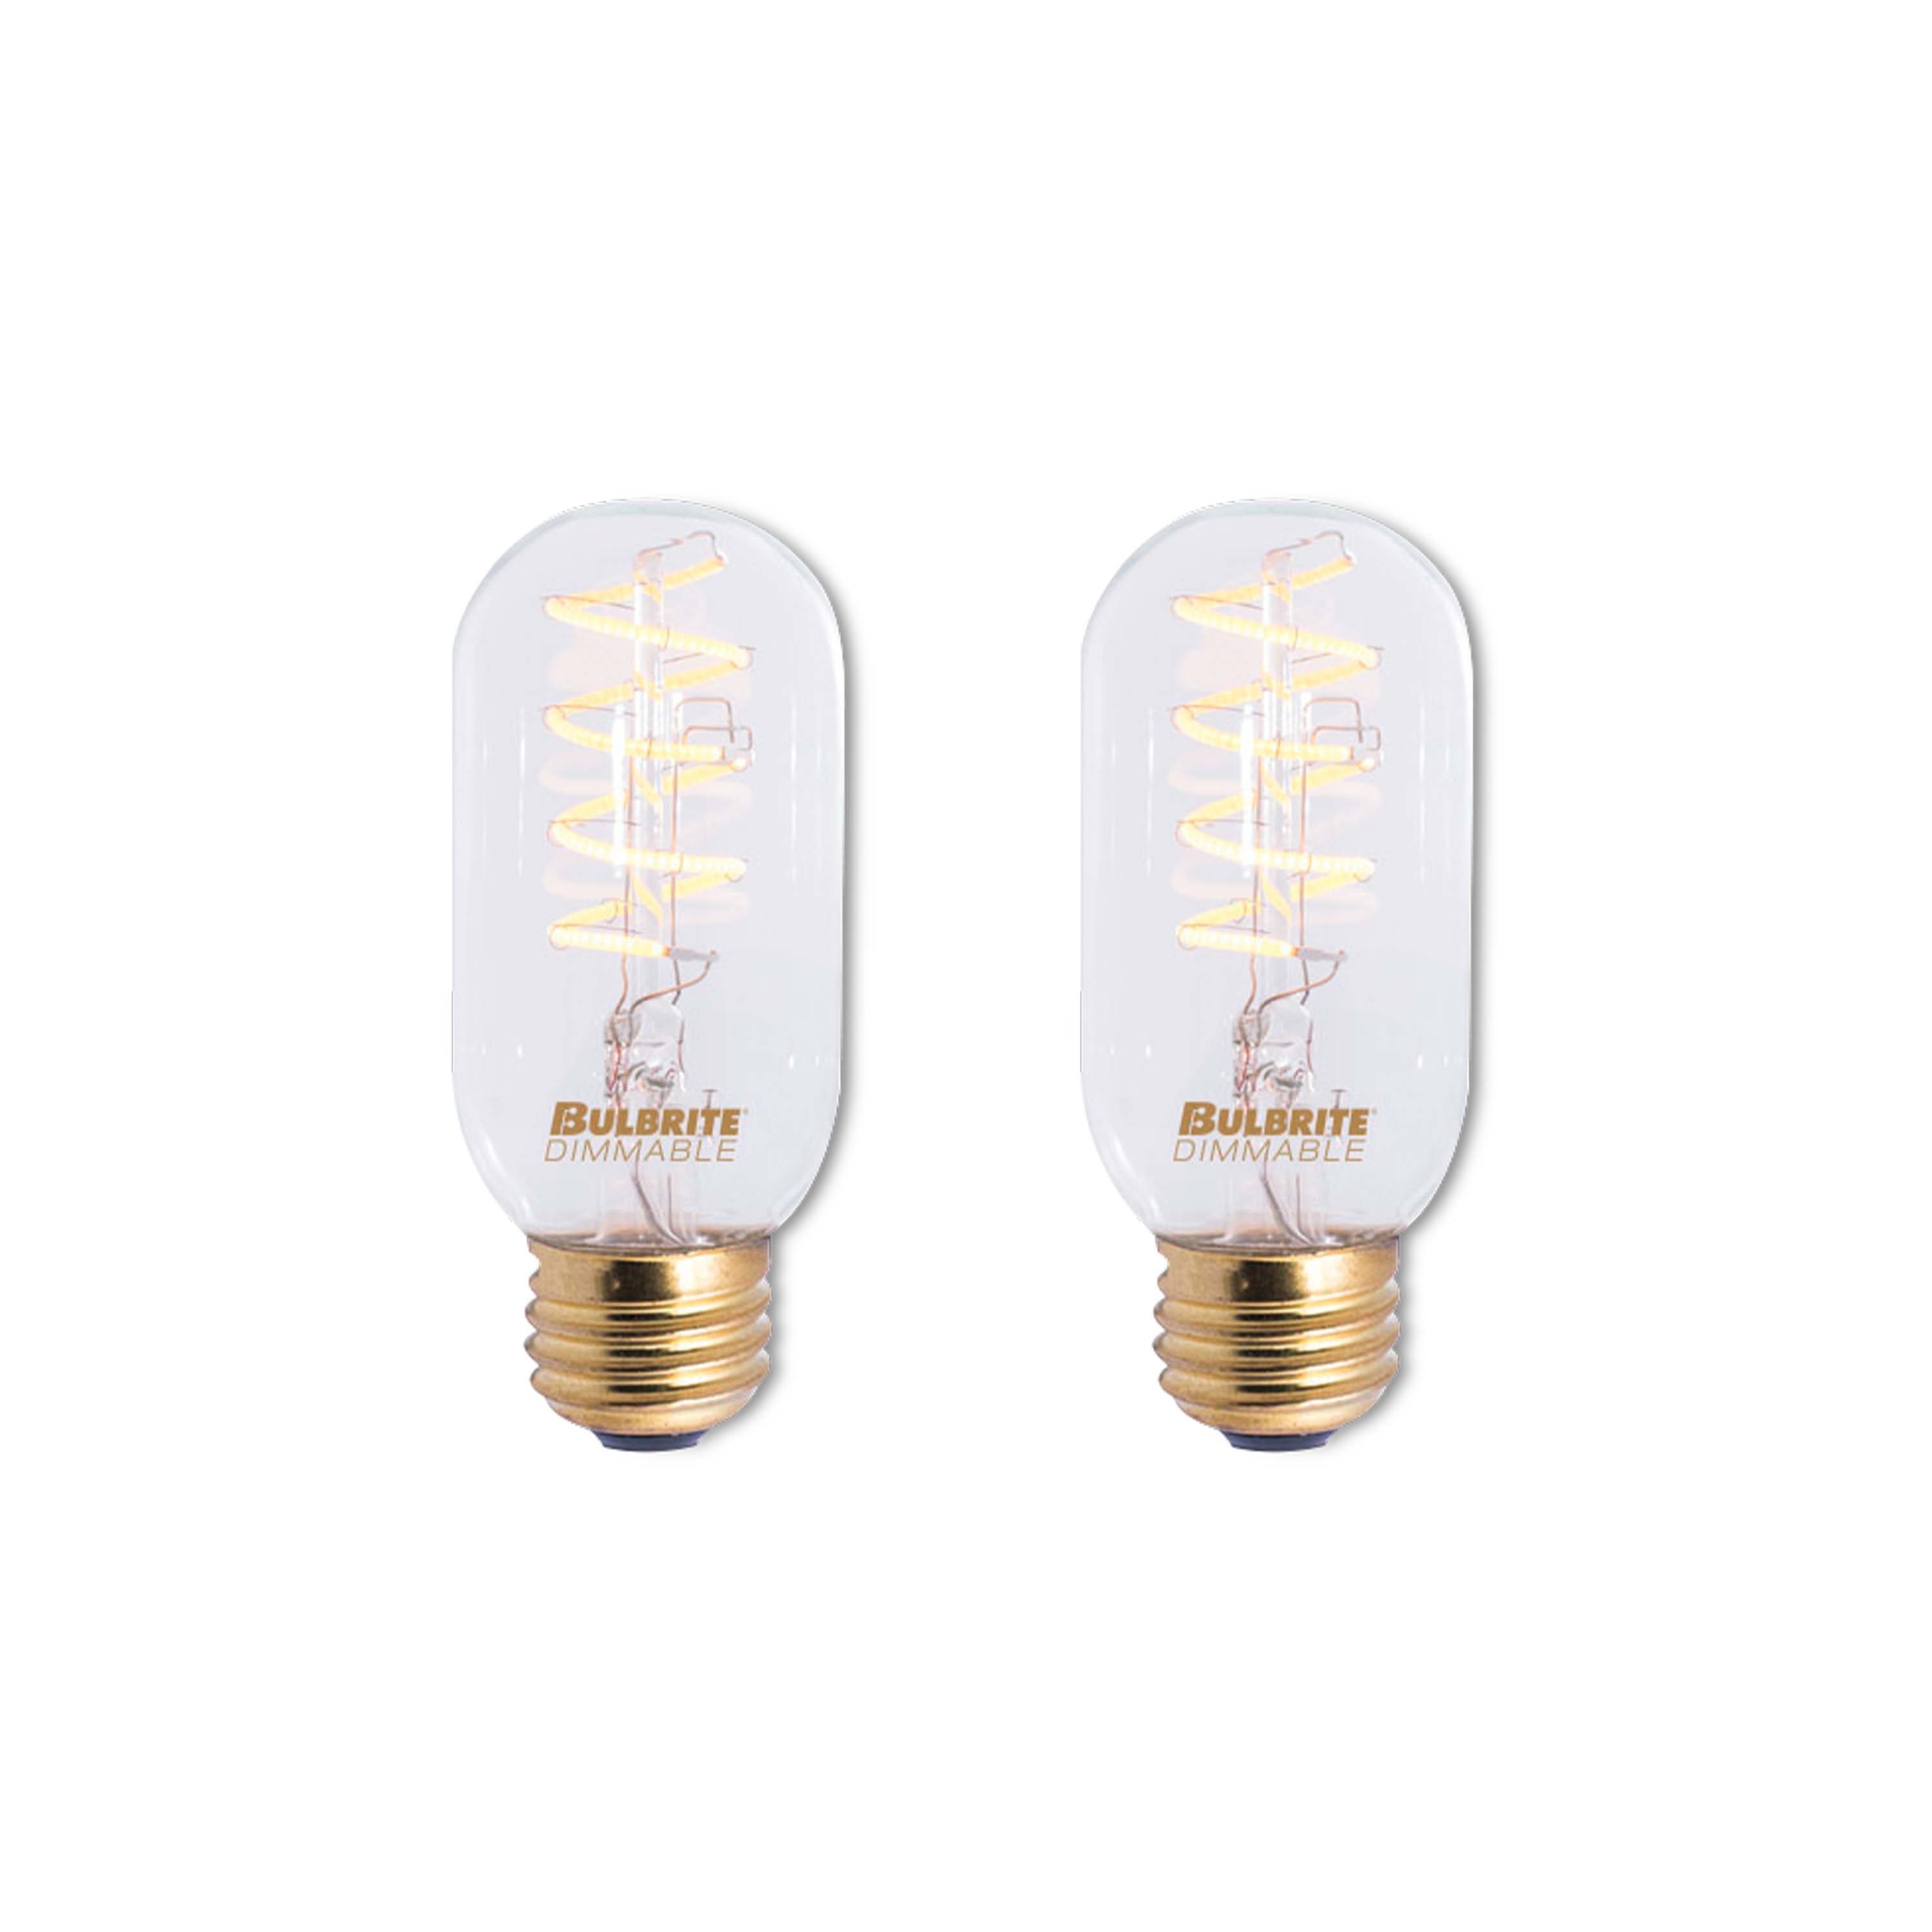 Bulbrite Light Bulbs at Lowes.com